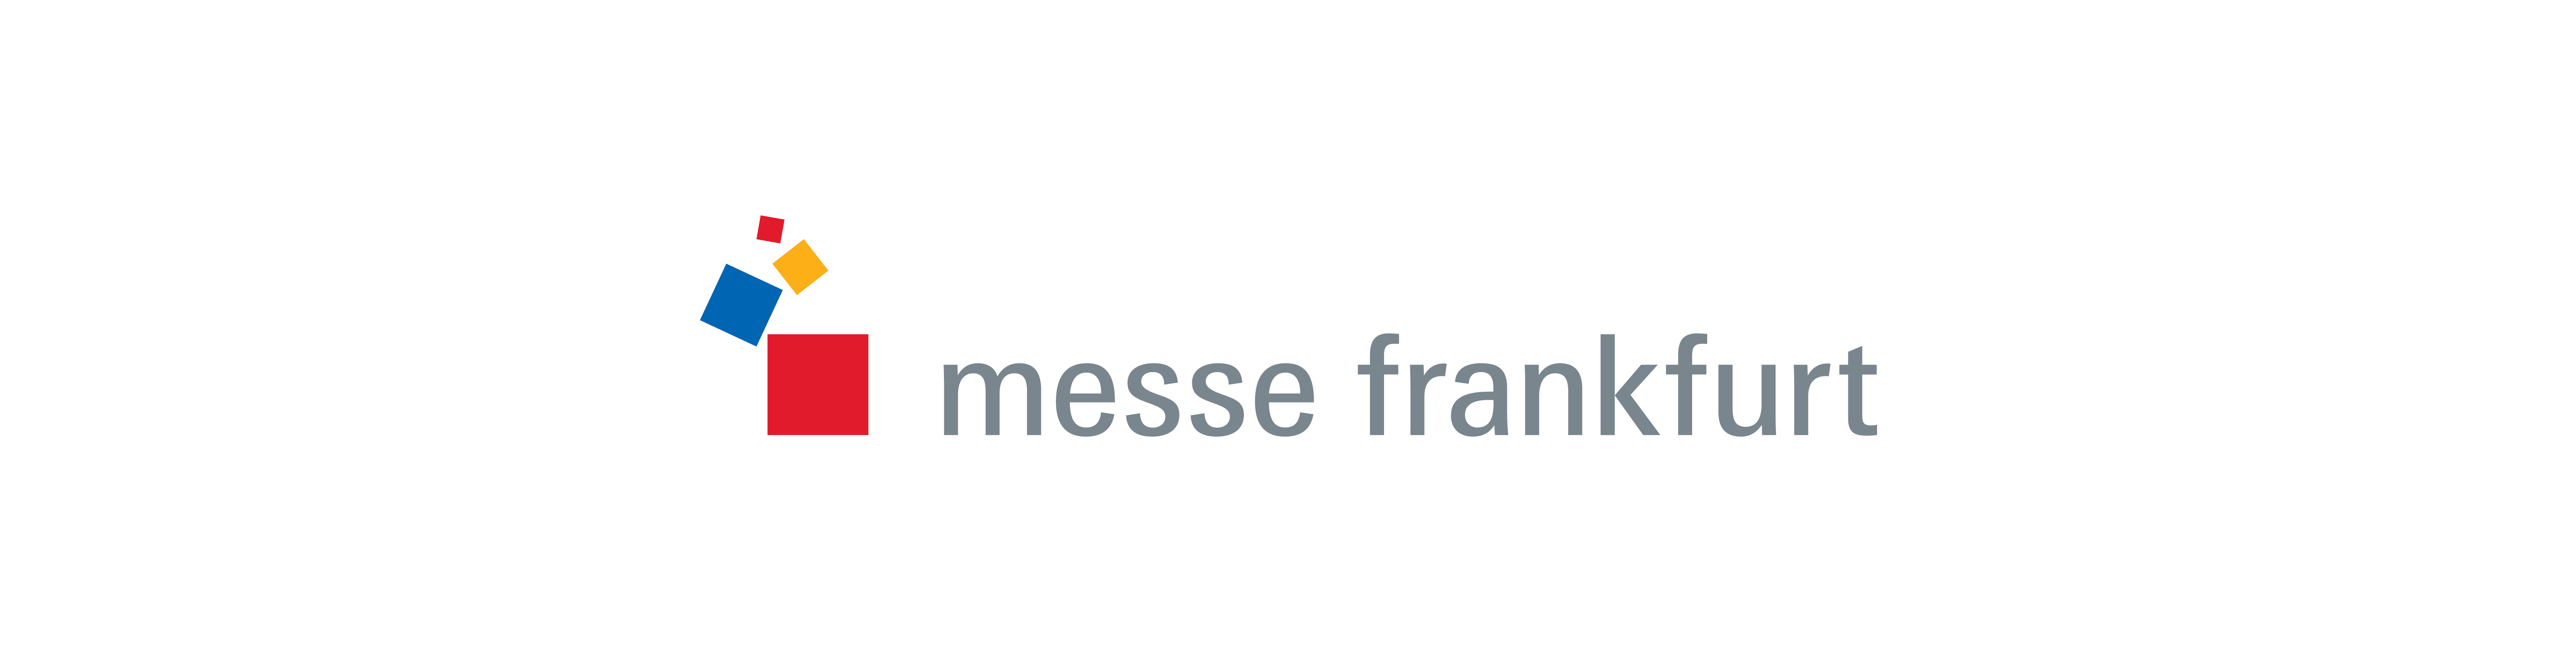 Messe Frankfurt Web